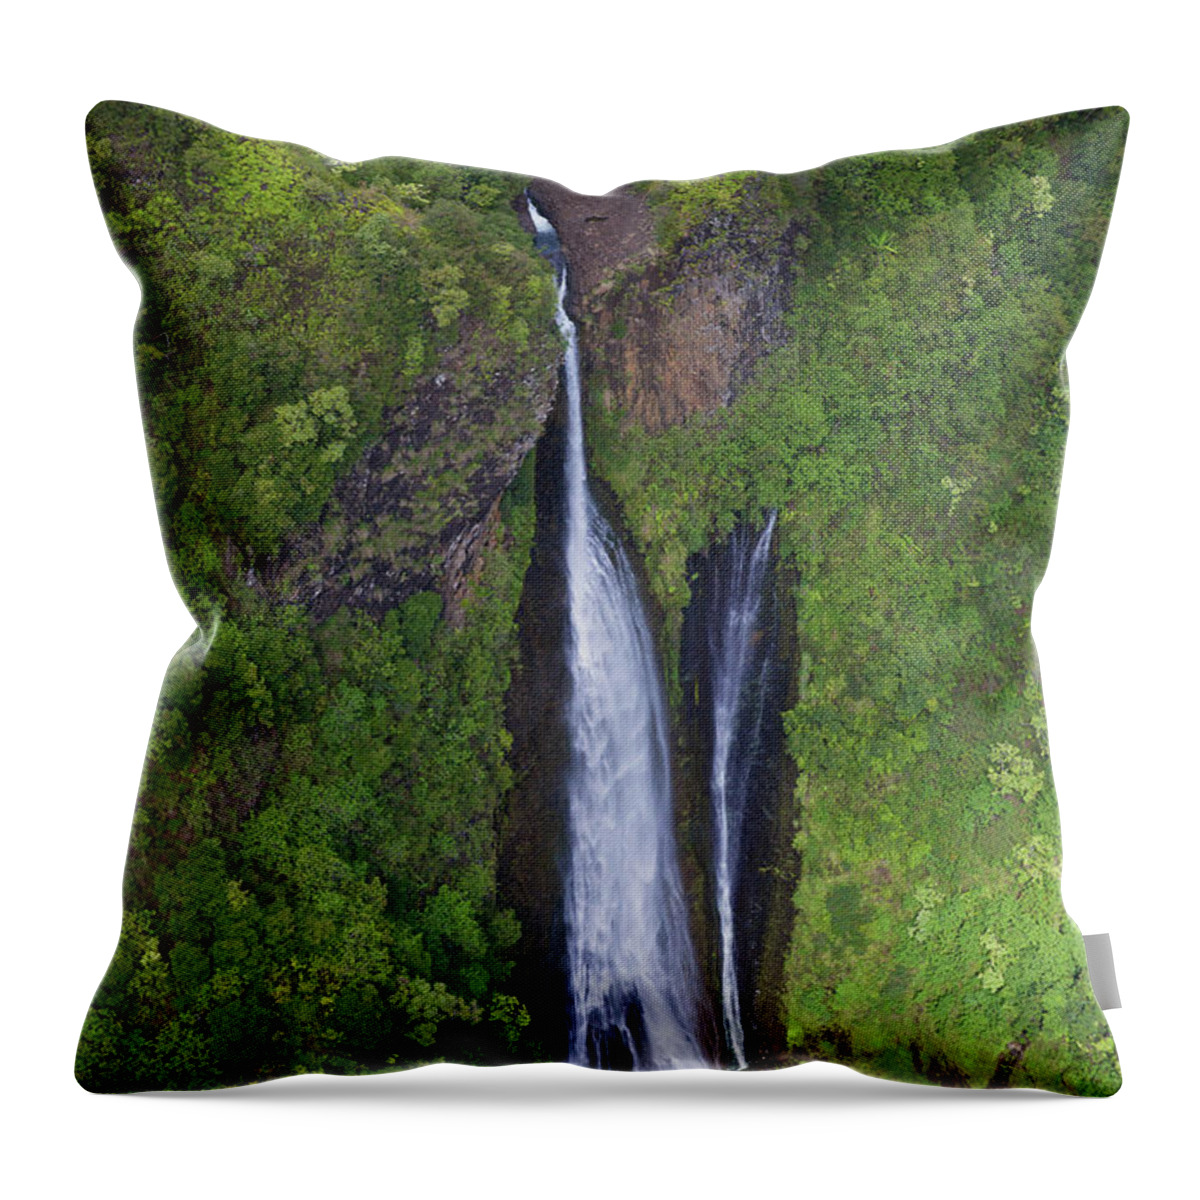 Kauai Throw Pillow featuring the photograph Private Kauai by Steven Lapkin